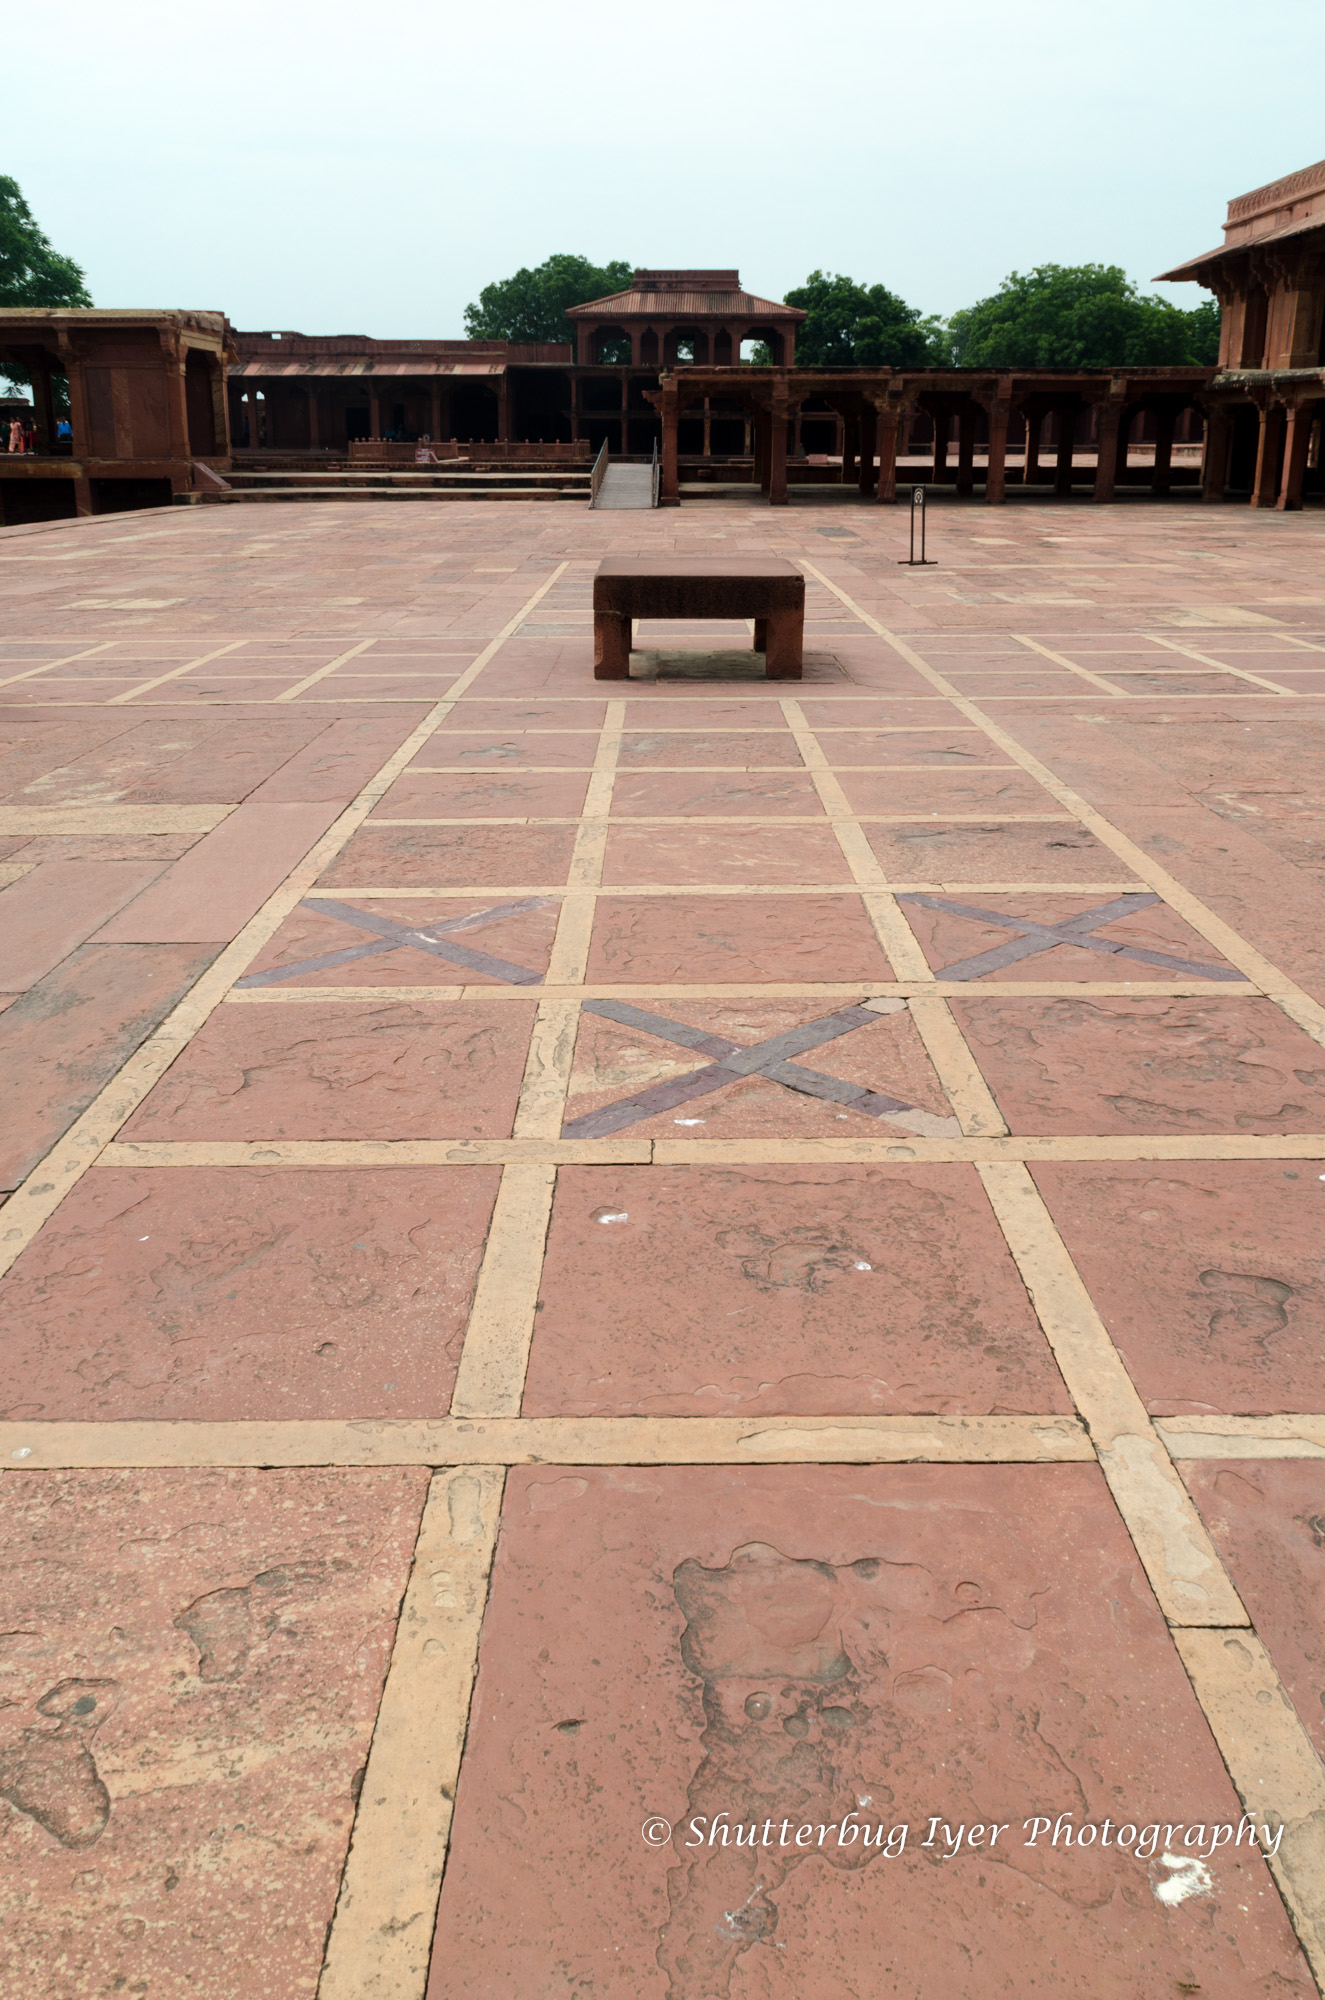 Chaupad squares at Fatehpur Sikri